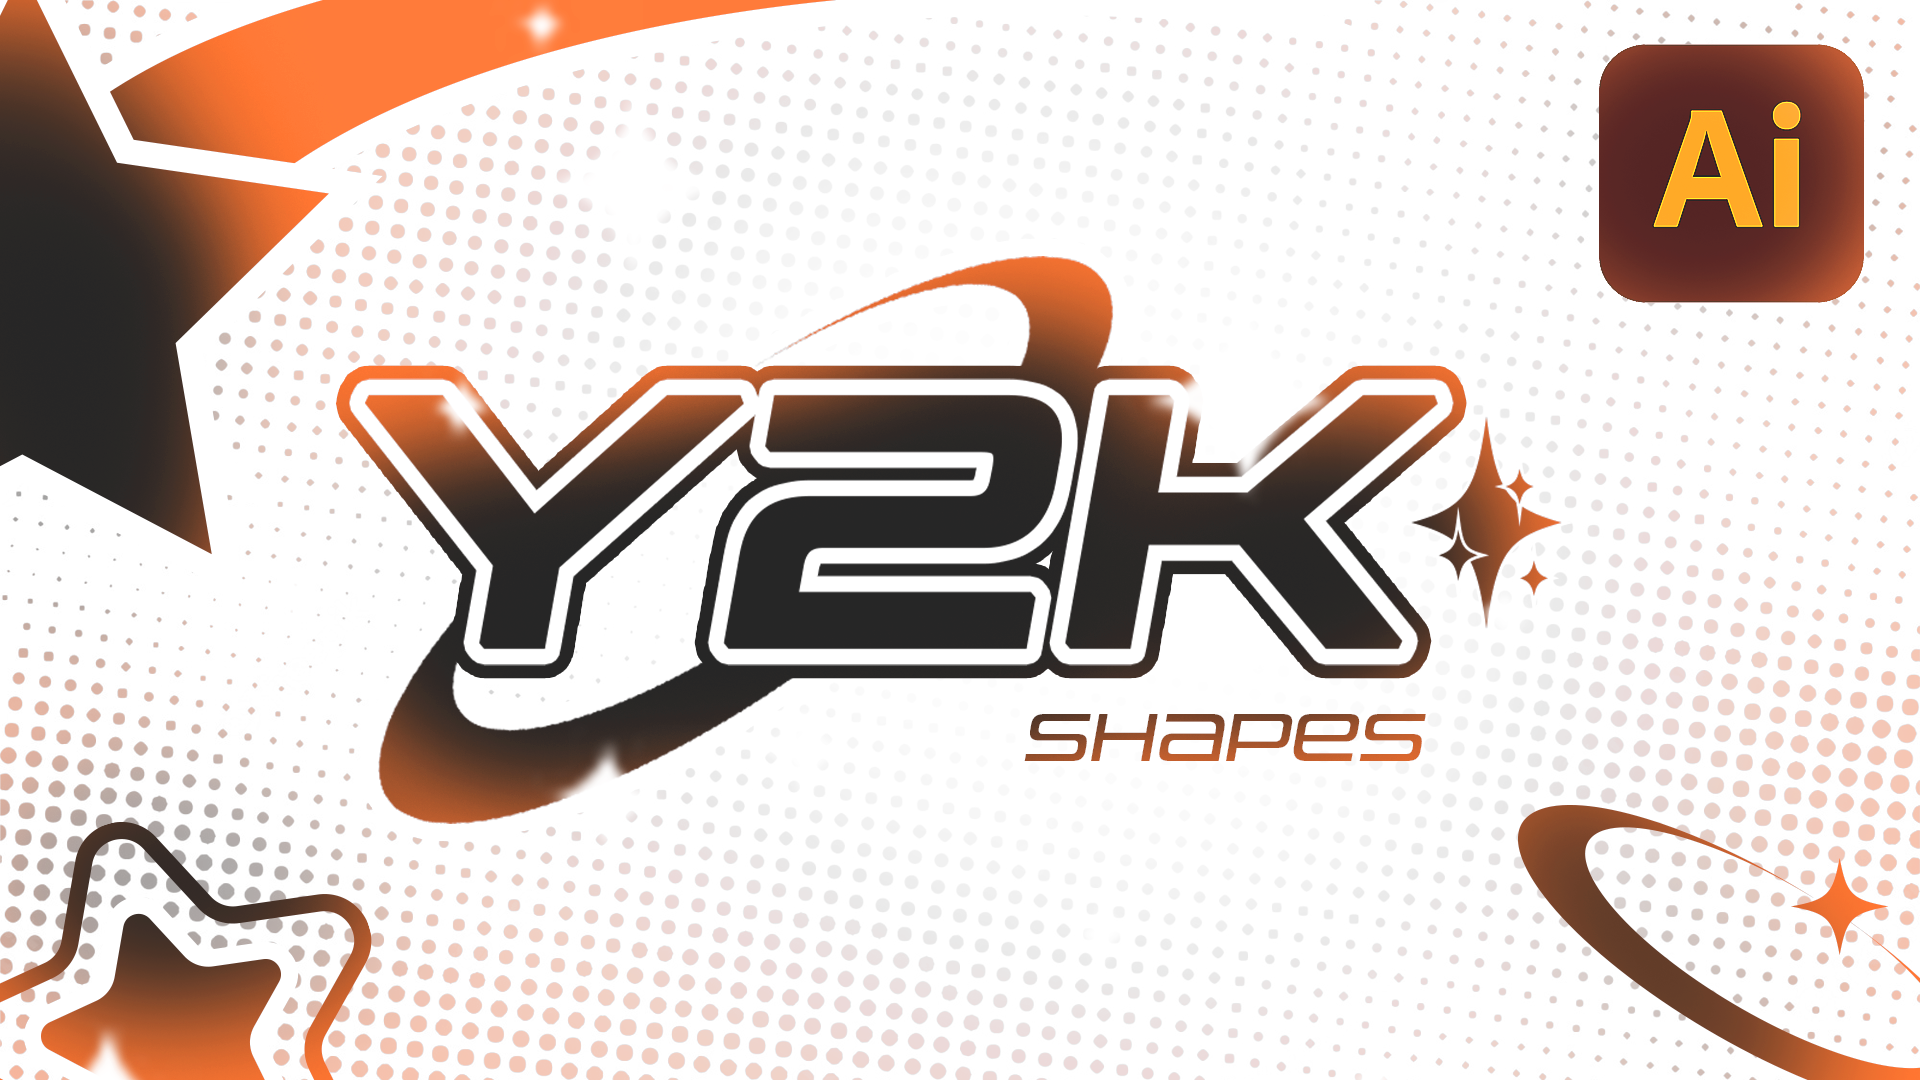 CREATE Y2K Vector Shapes! - Illustrator CC Tutorial